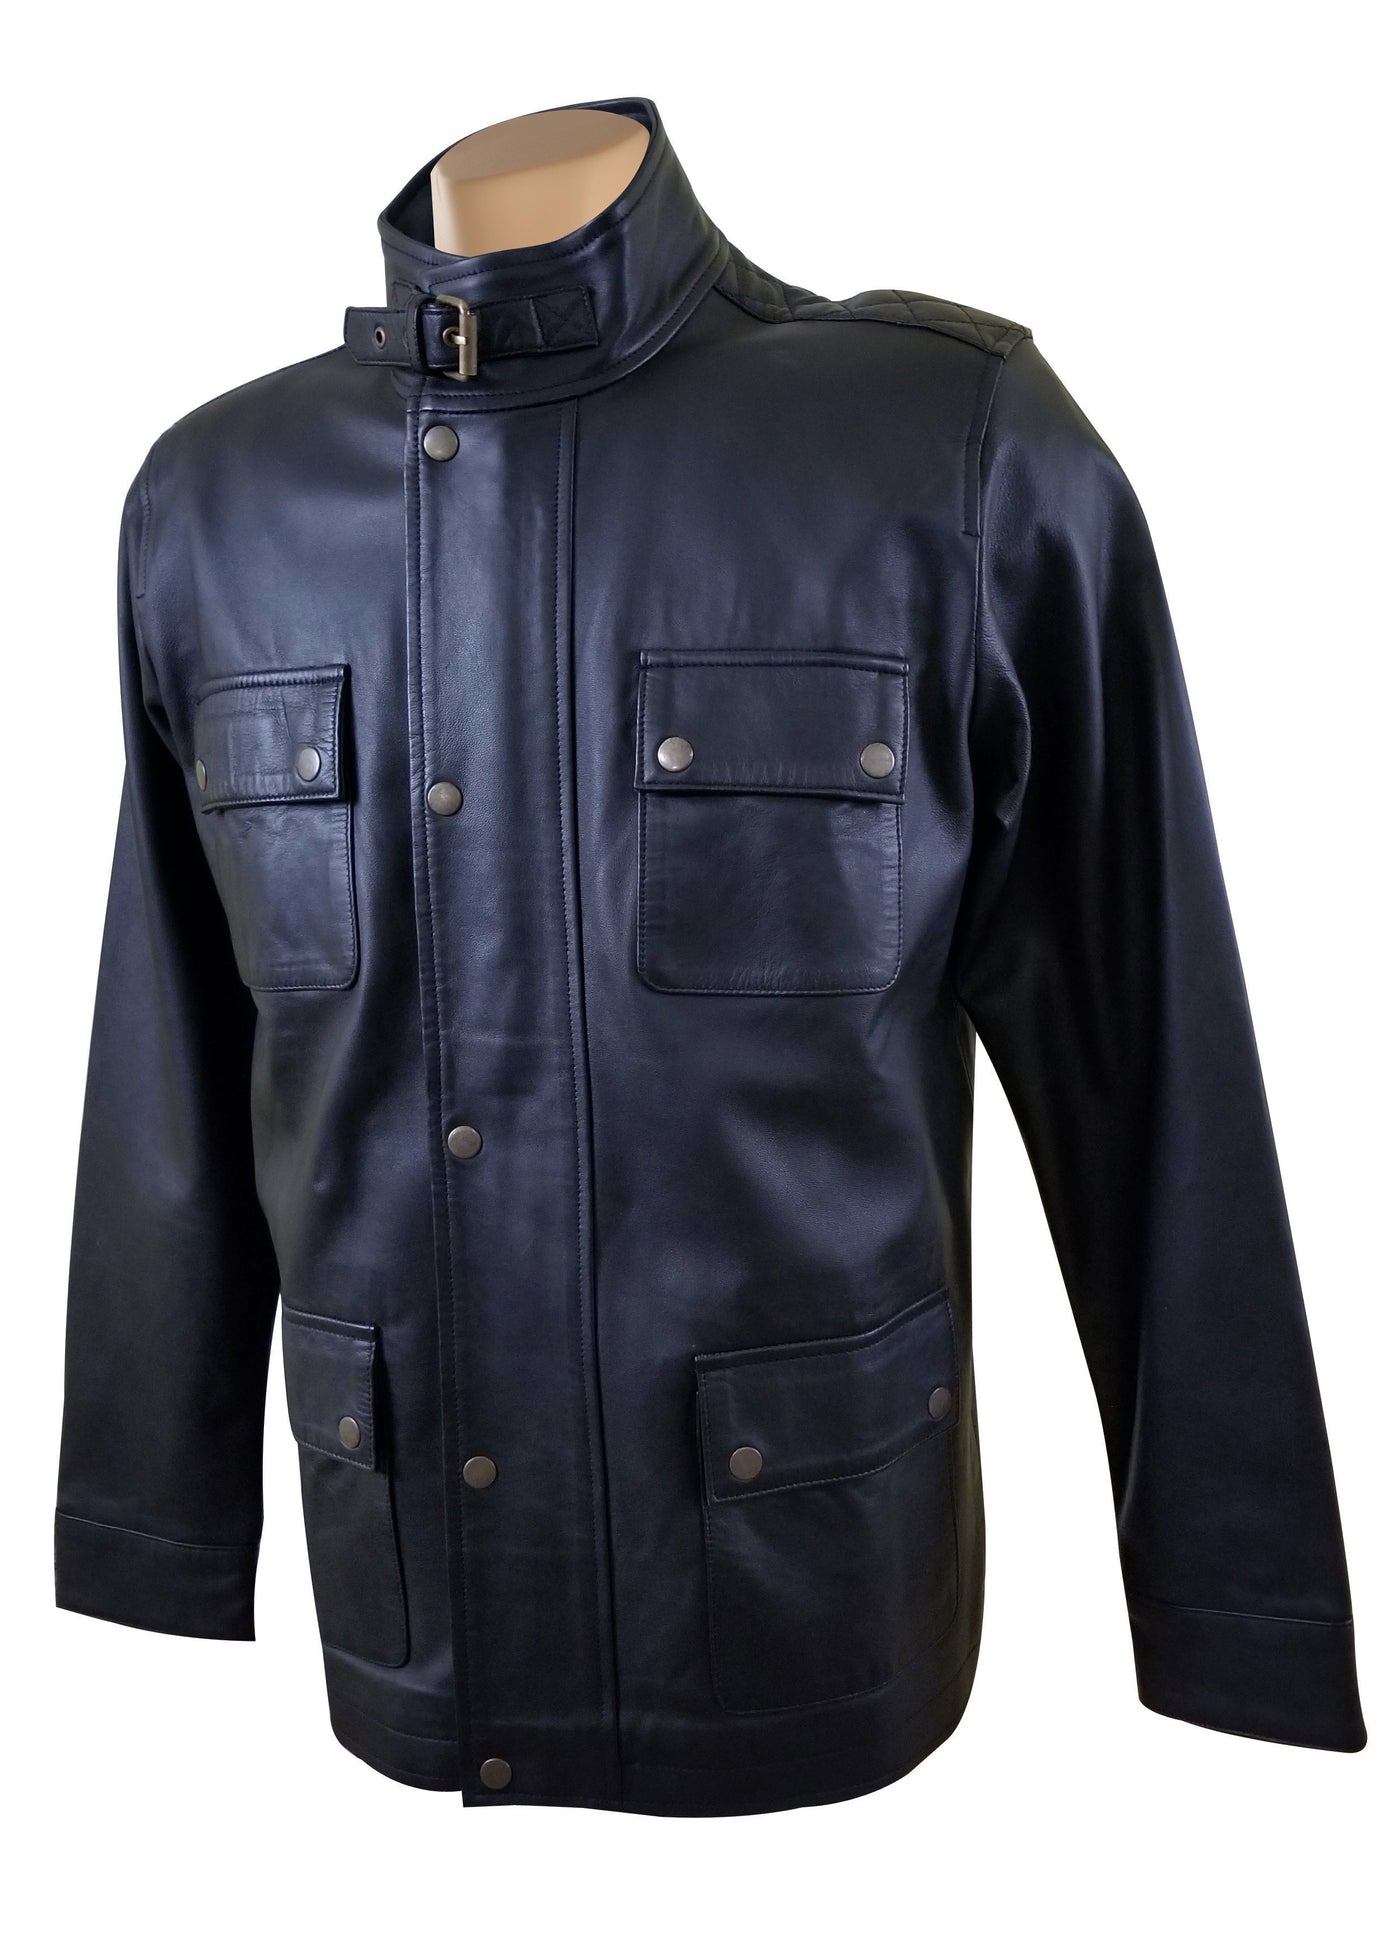 Lightweight Collar Belt Mosley's leather jacket